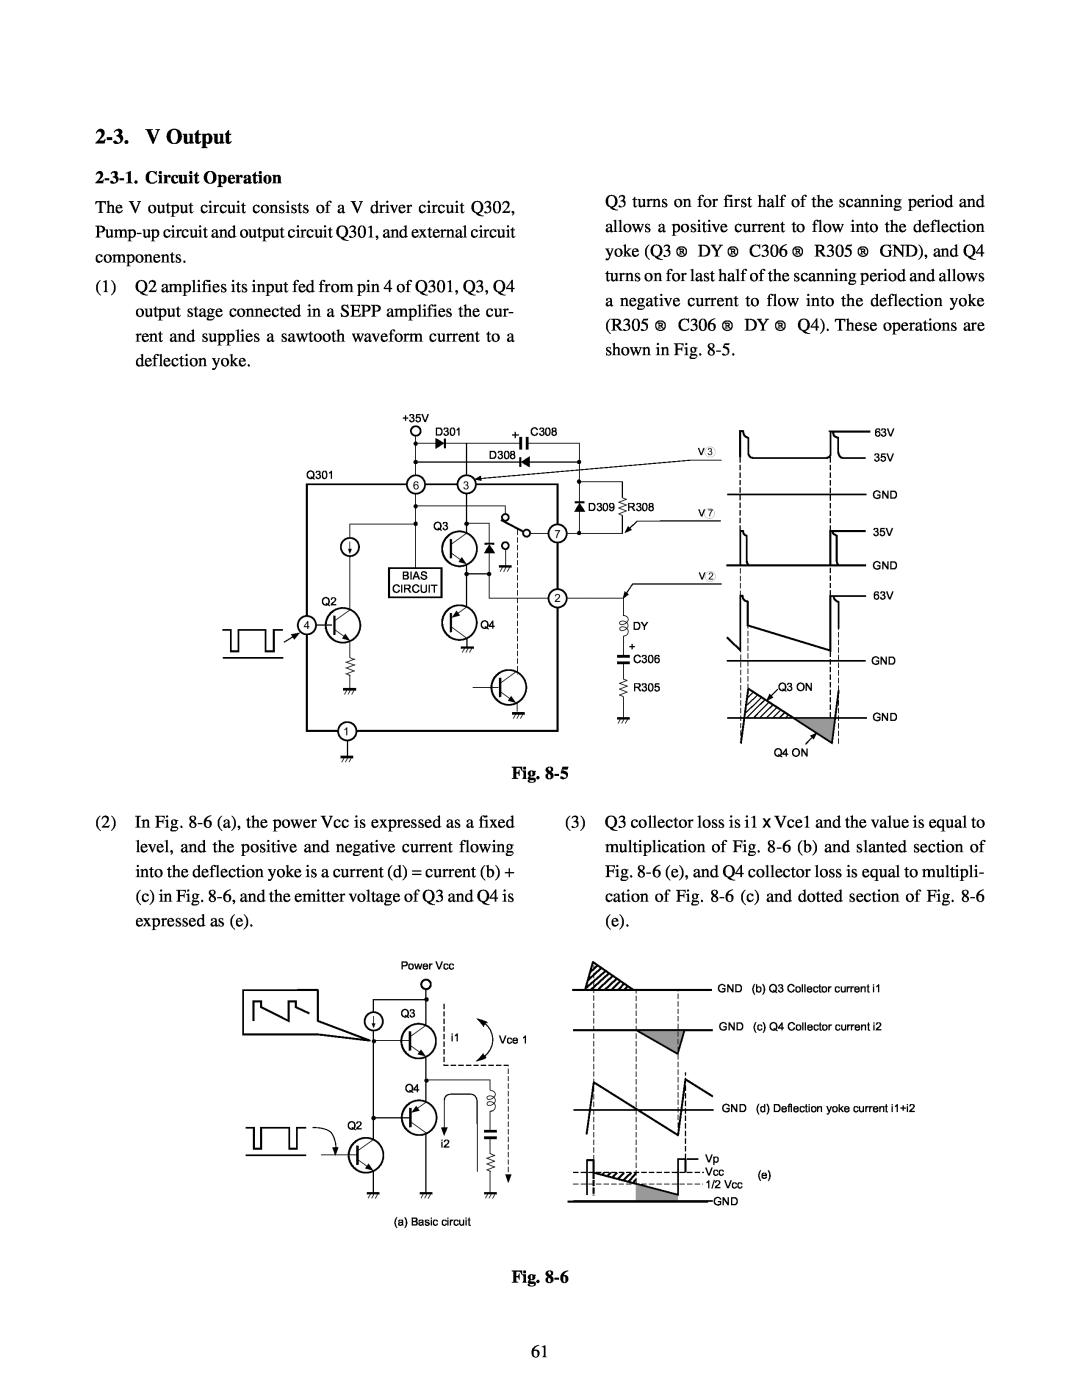 Toshiba TW40F80 manual V Output, Circuit Operation 